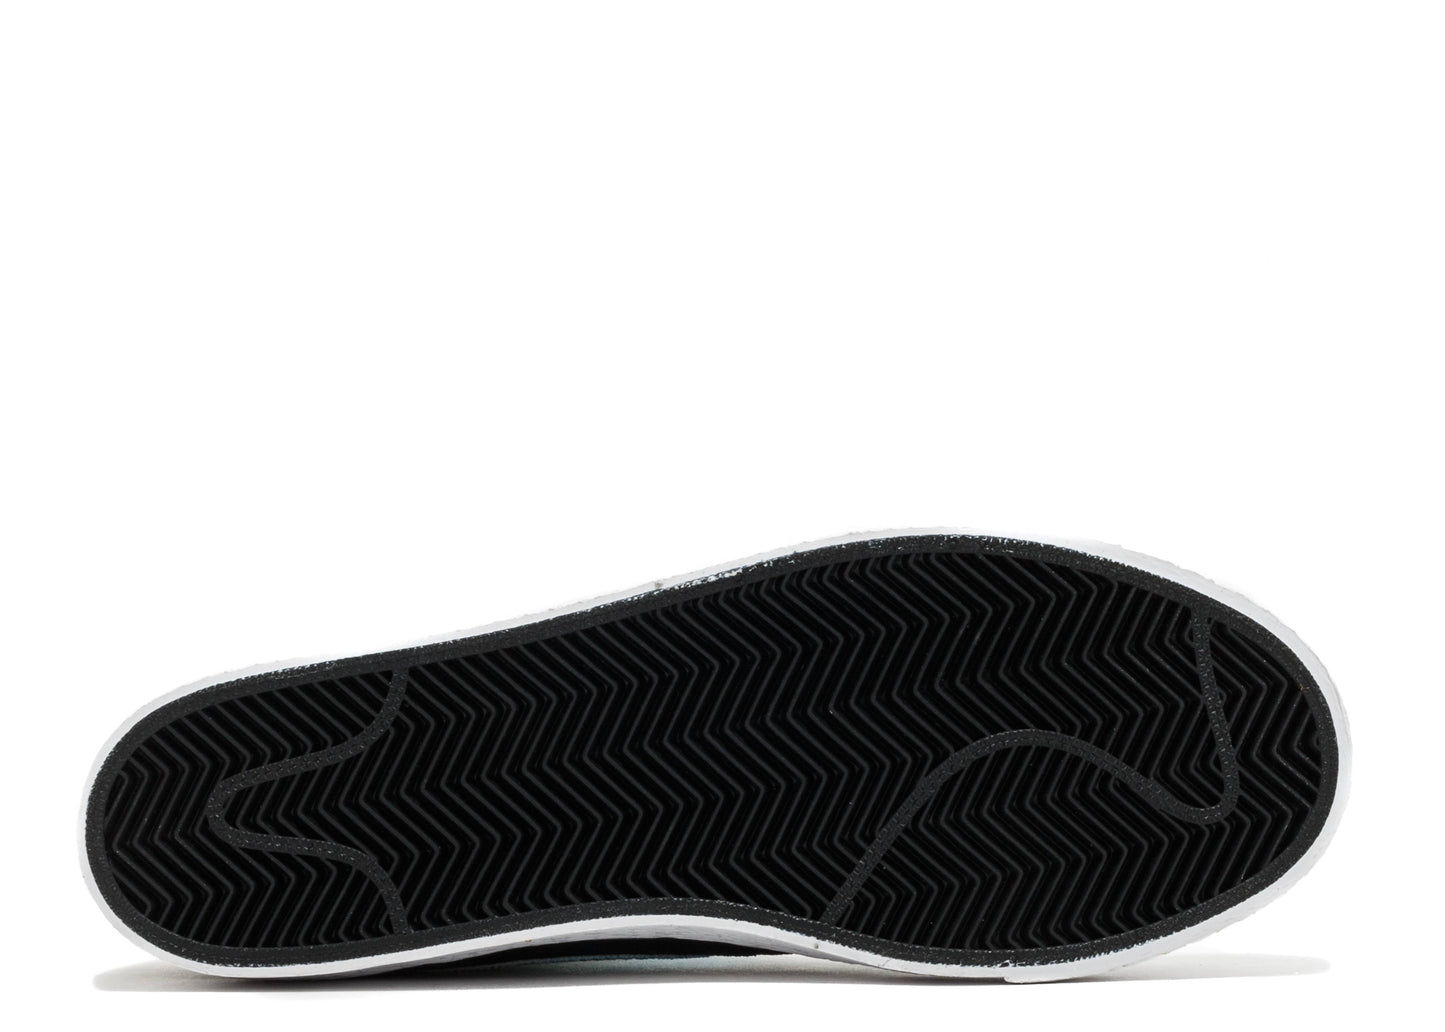 Lance Mountain x Nike SB Zoom Blazer Mid QS